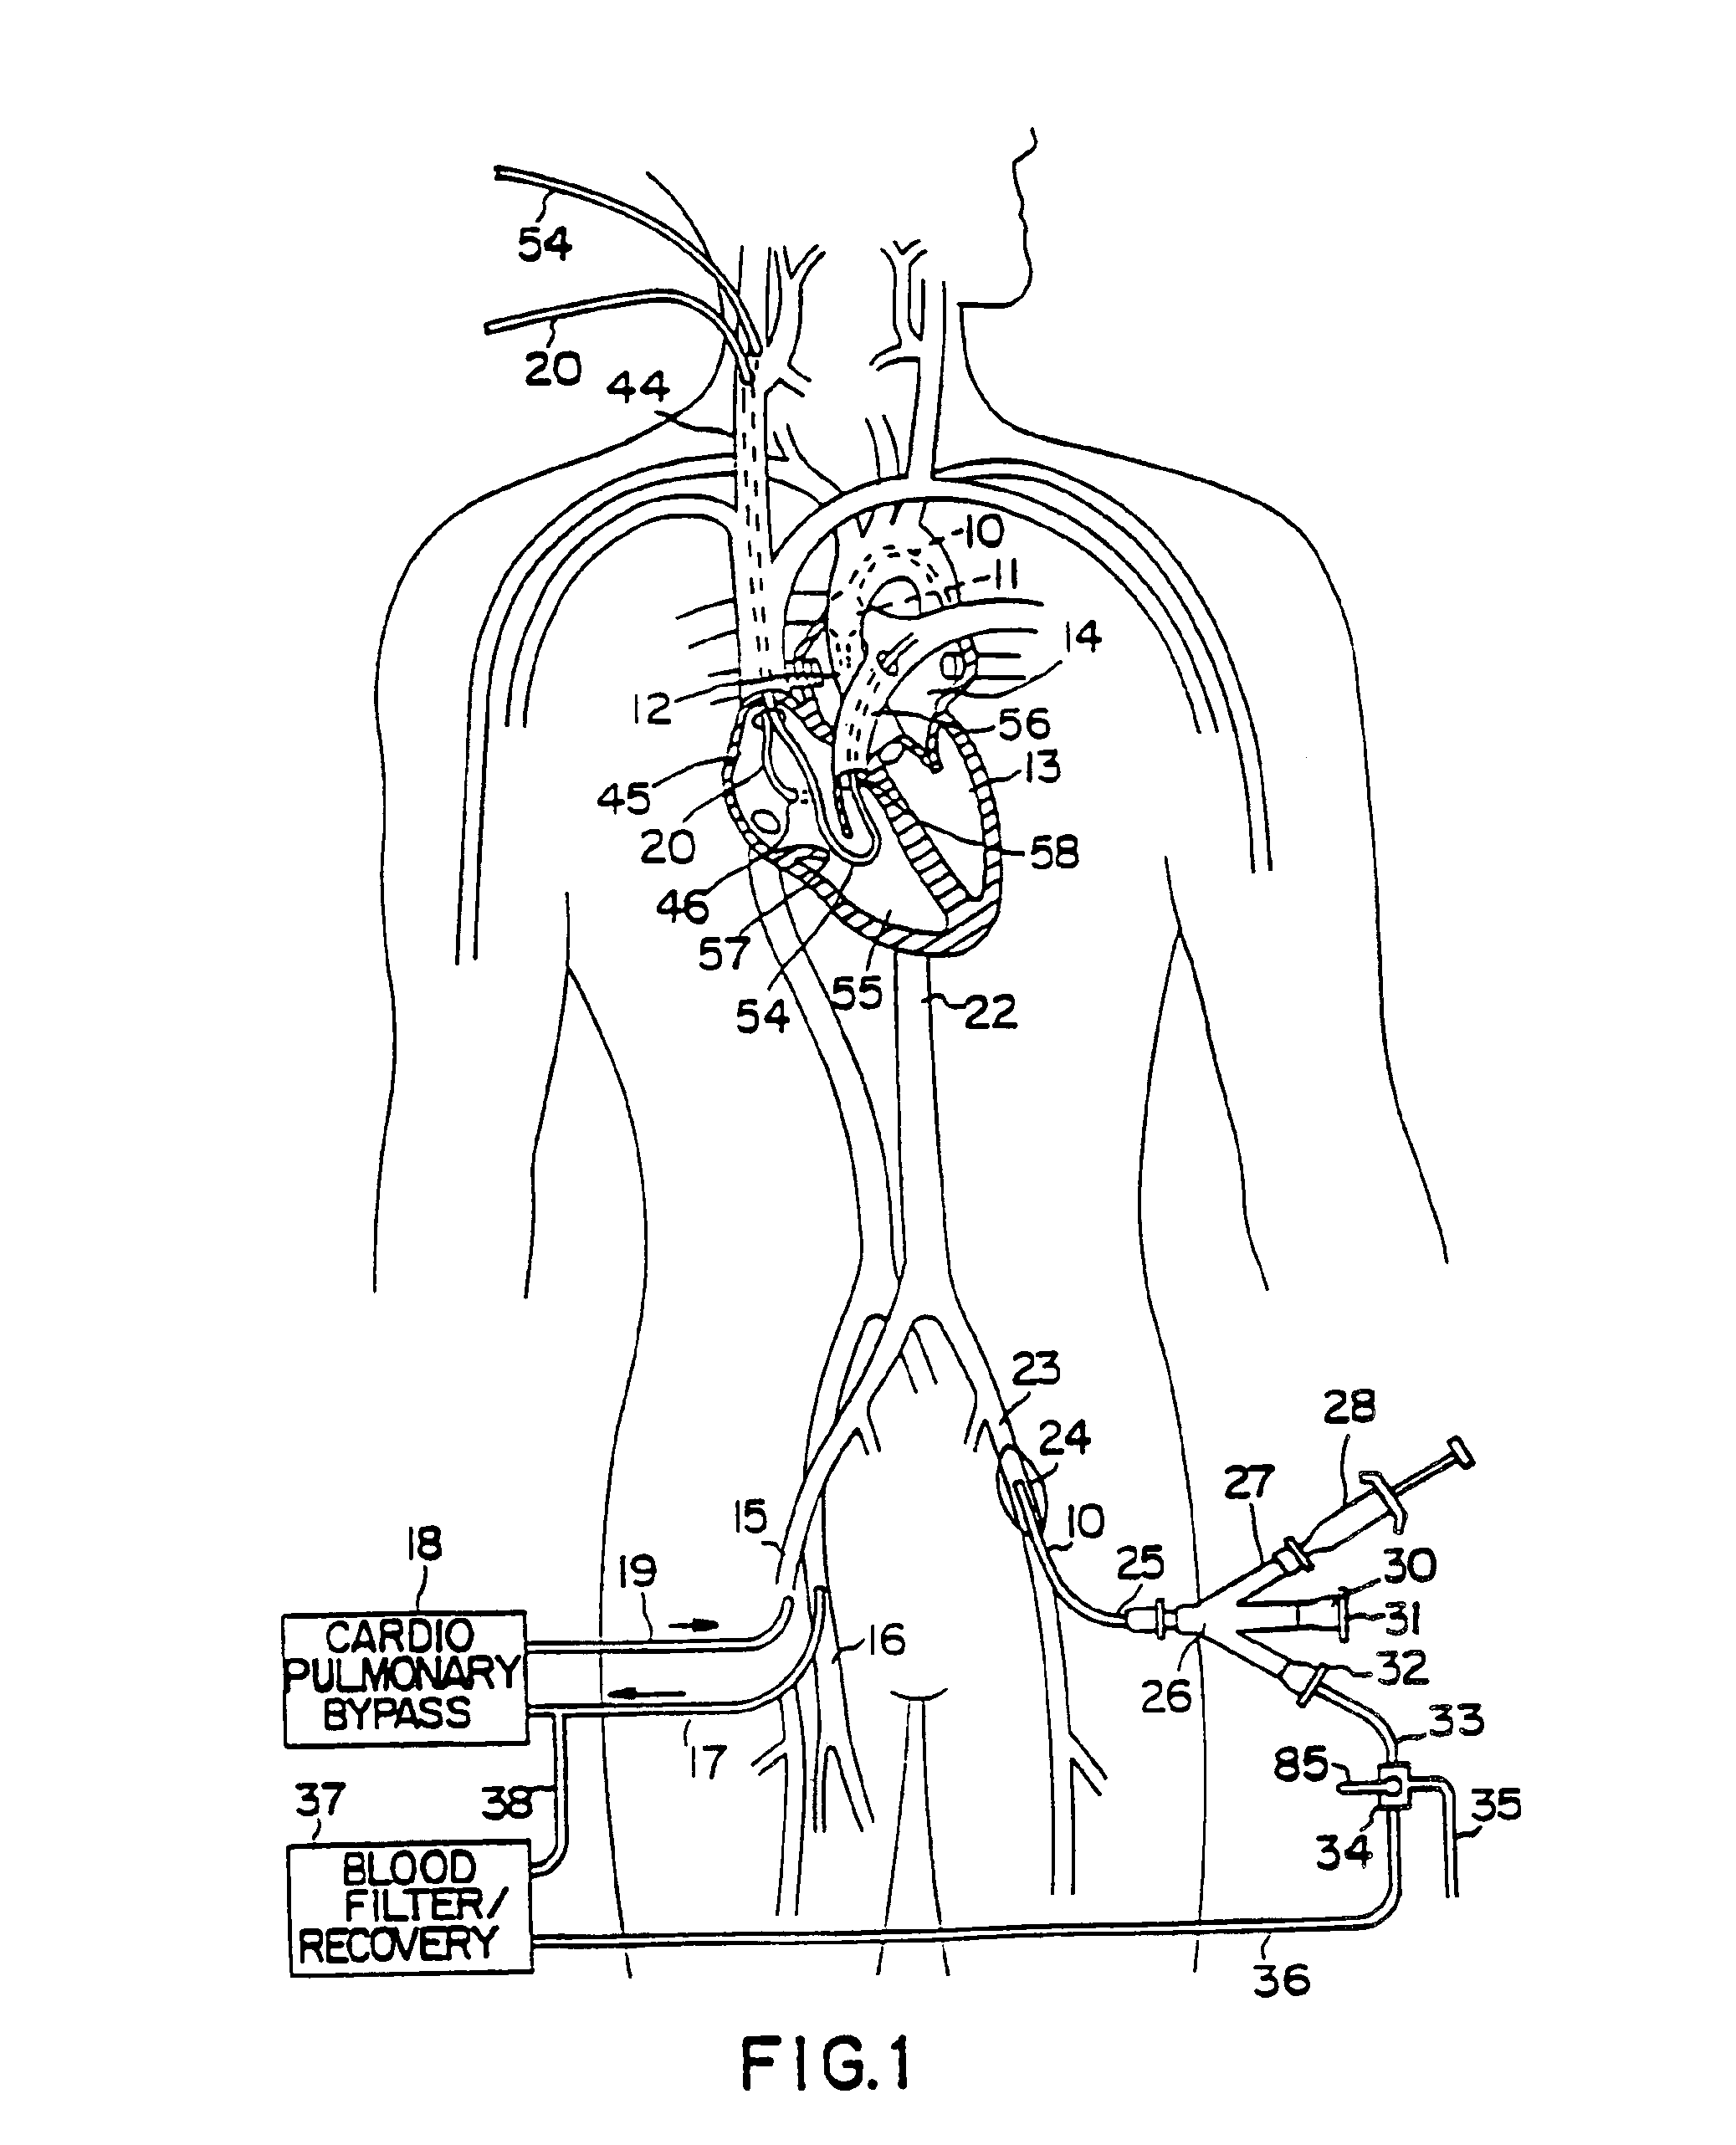 System for cardiac procedures